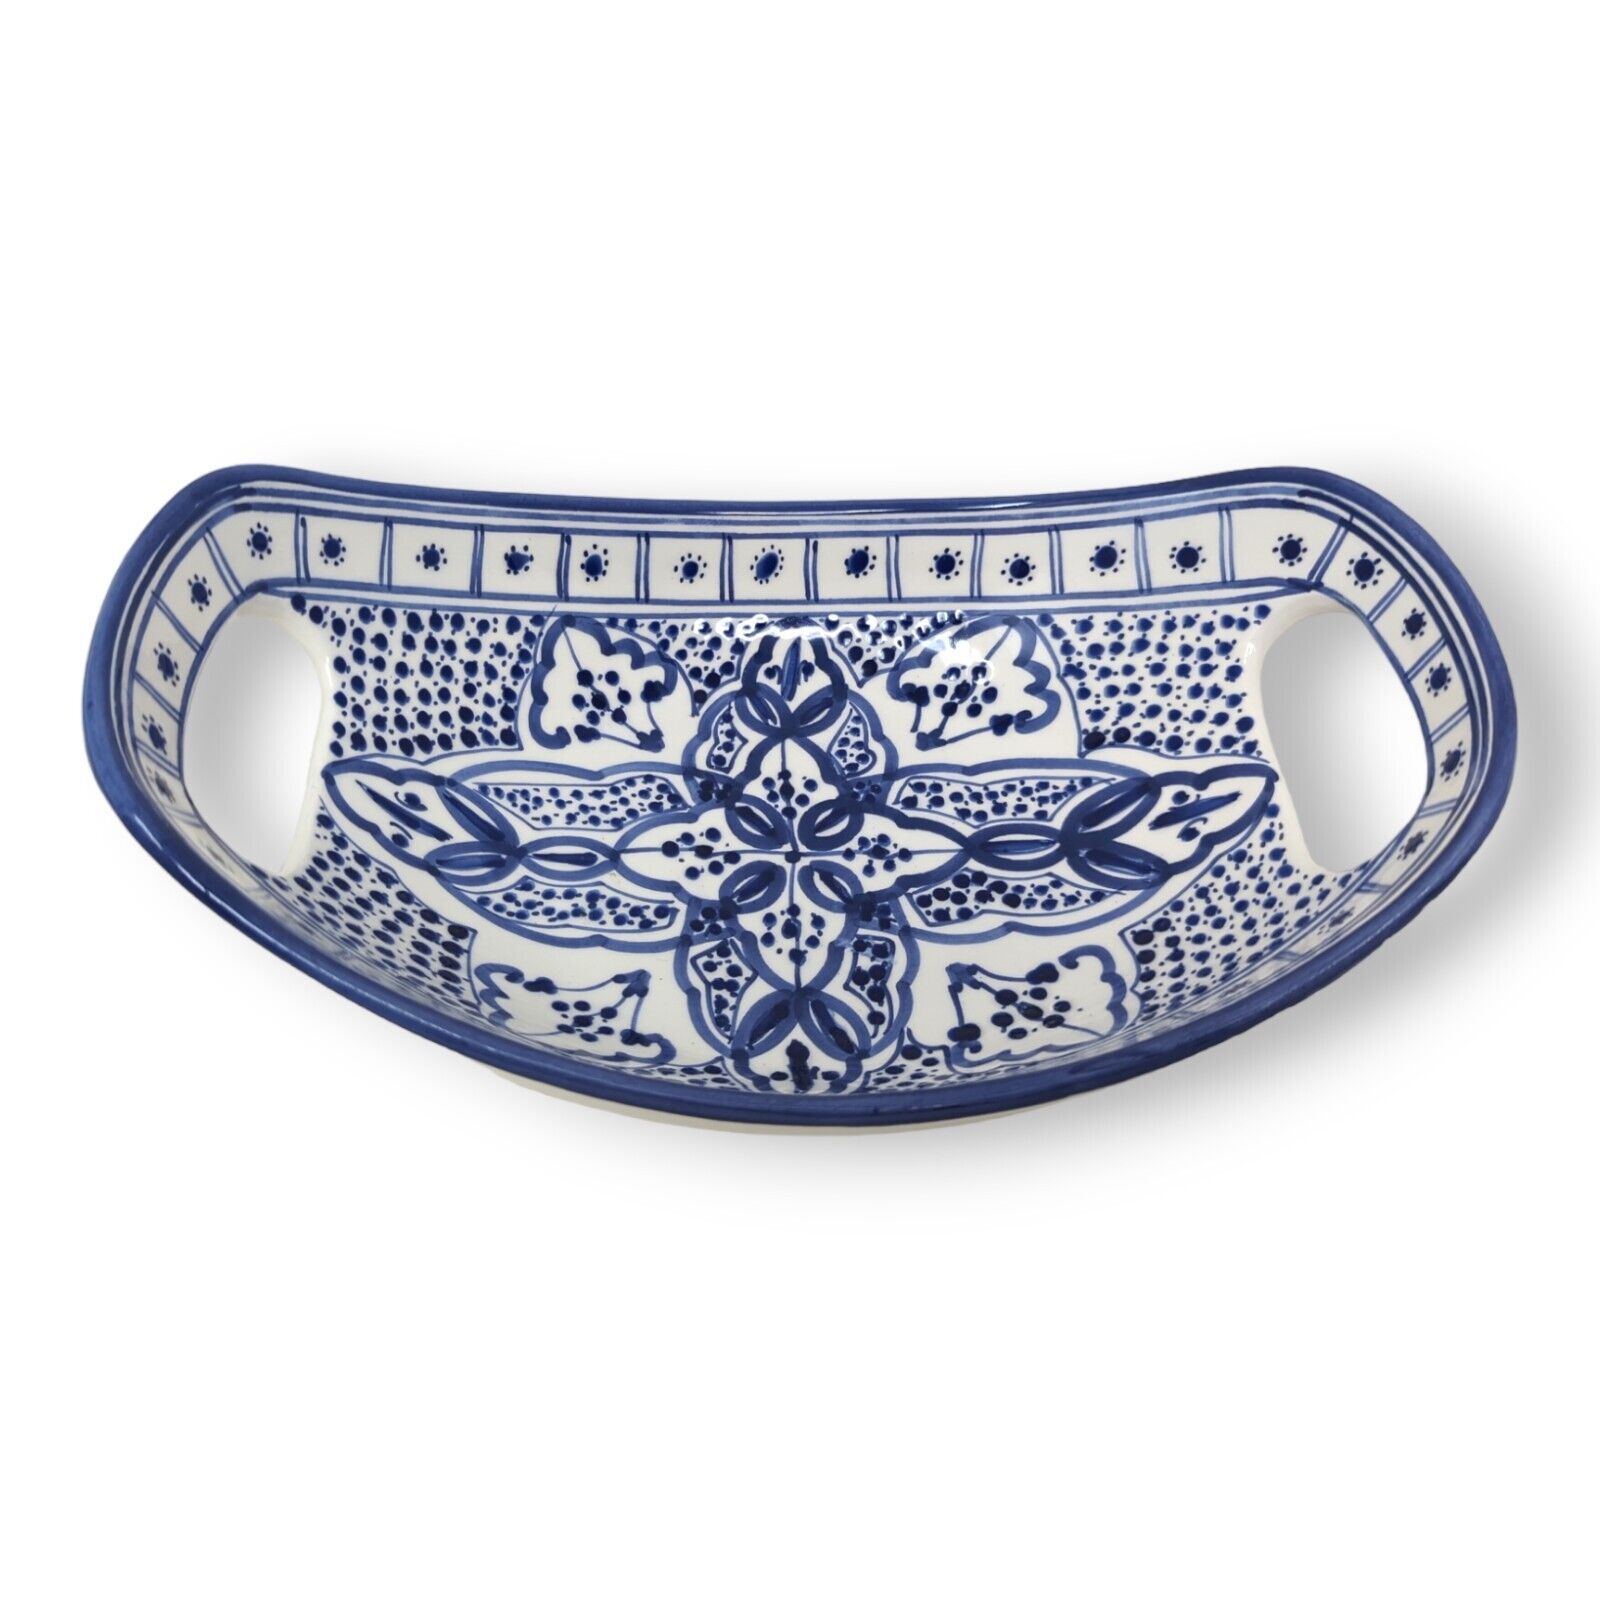 Poterie Slama Pottery Serving Bowl, Made In Tunisia - Stoneware Blue Design 11"L